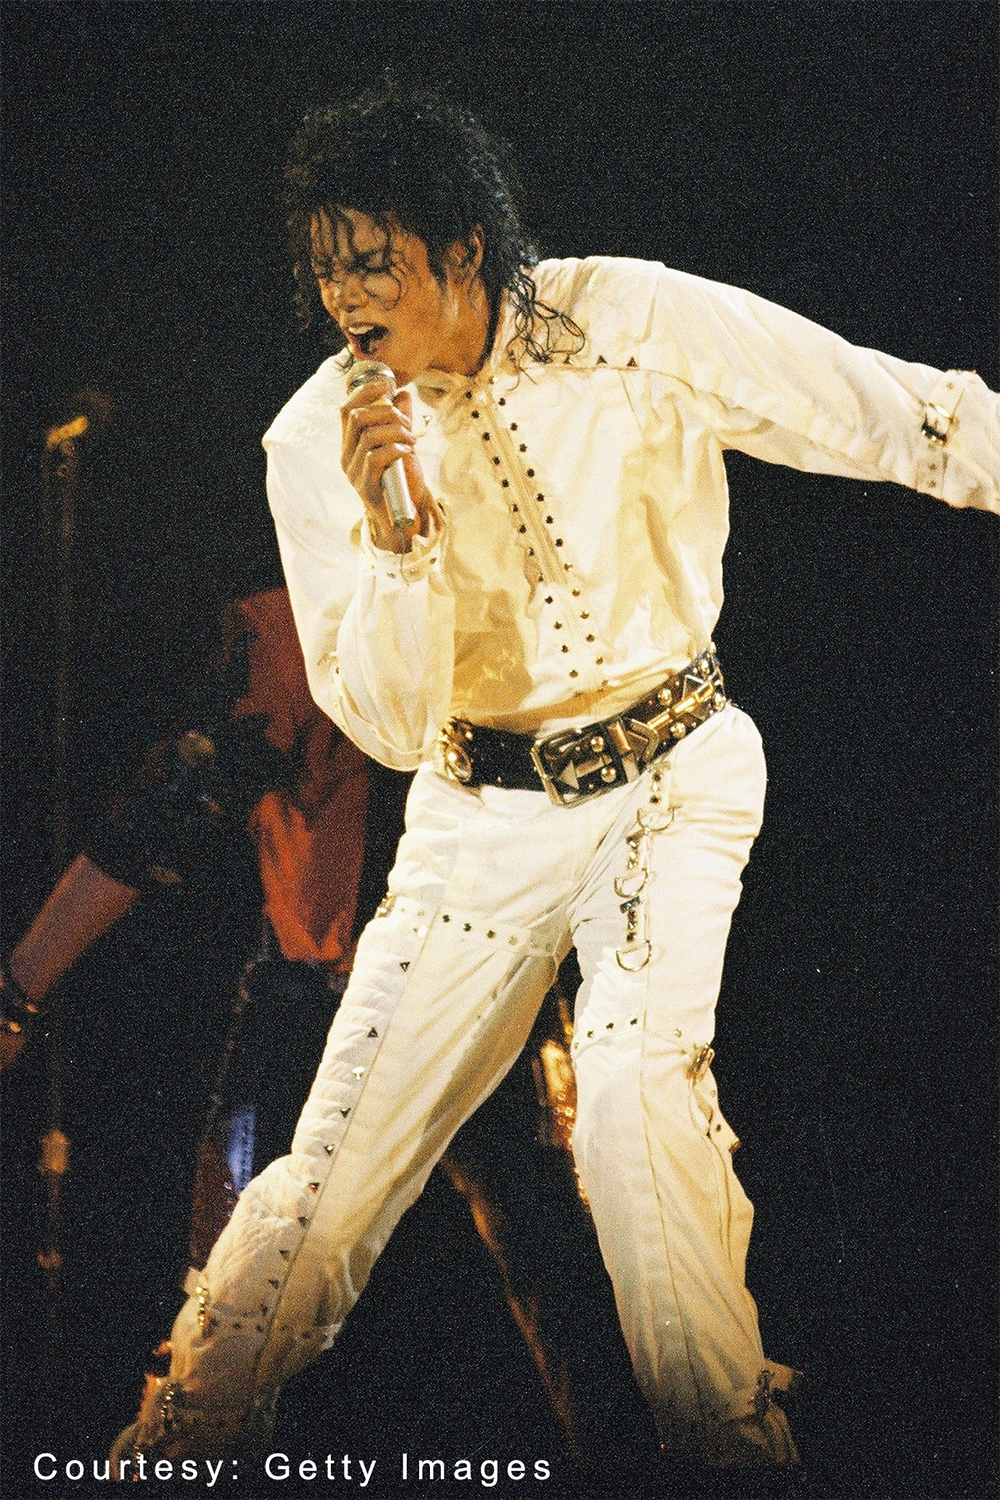 Michael Jackson performs at Wembley Stadium in London, U.K., on July 23, 1988